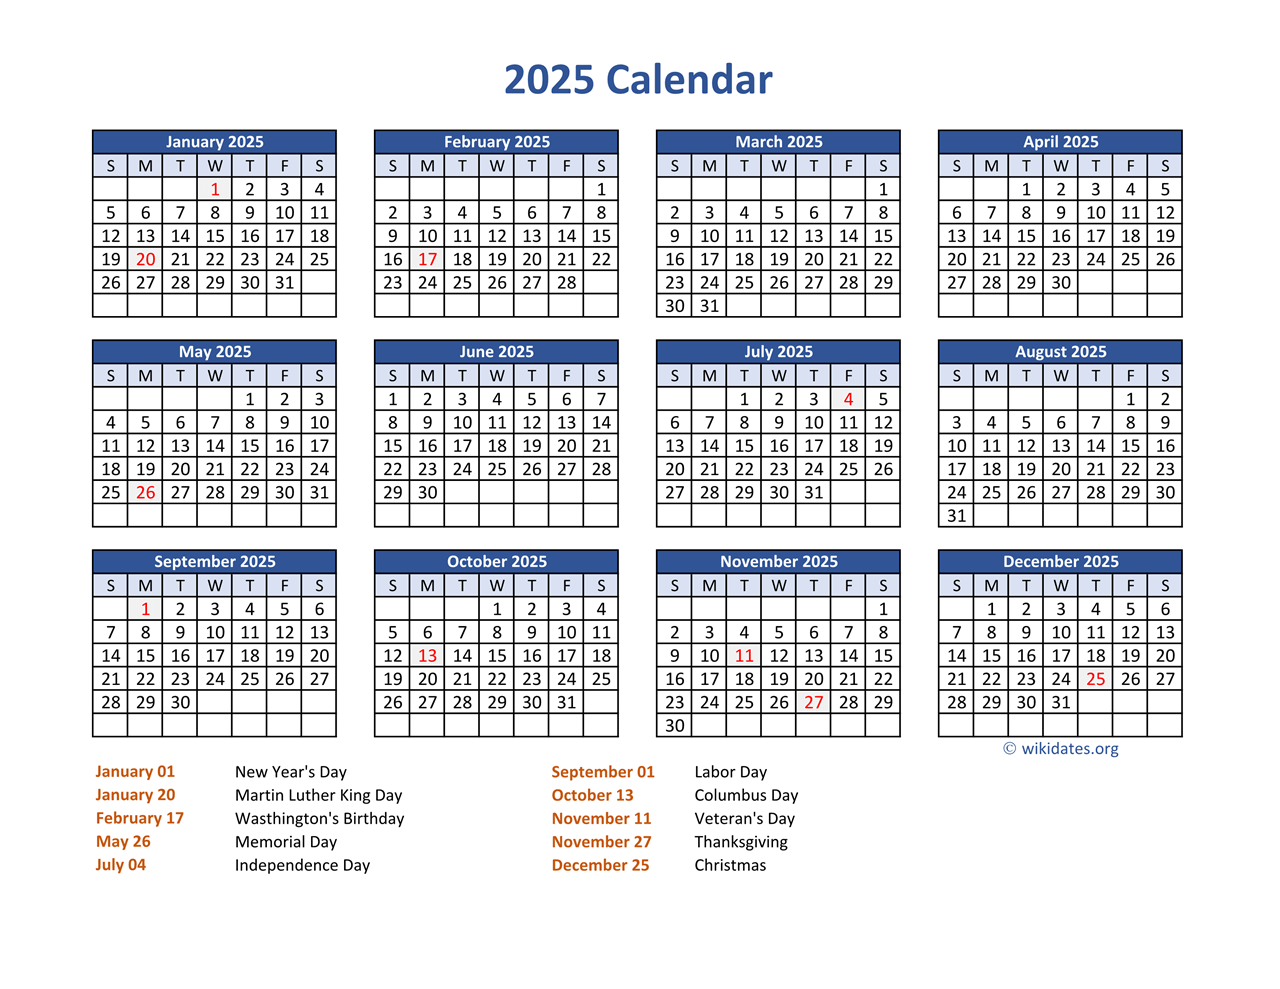 PDF Calendar 2025 with Federal Holidays  WikiDates.org